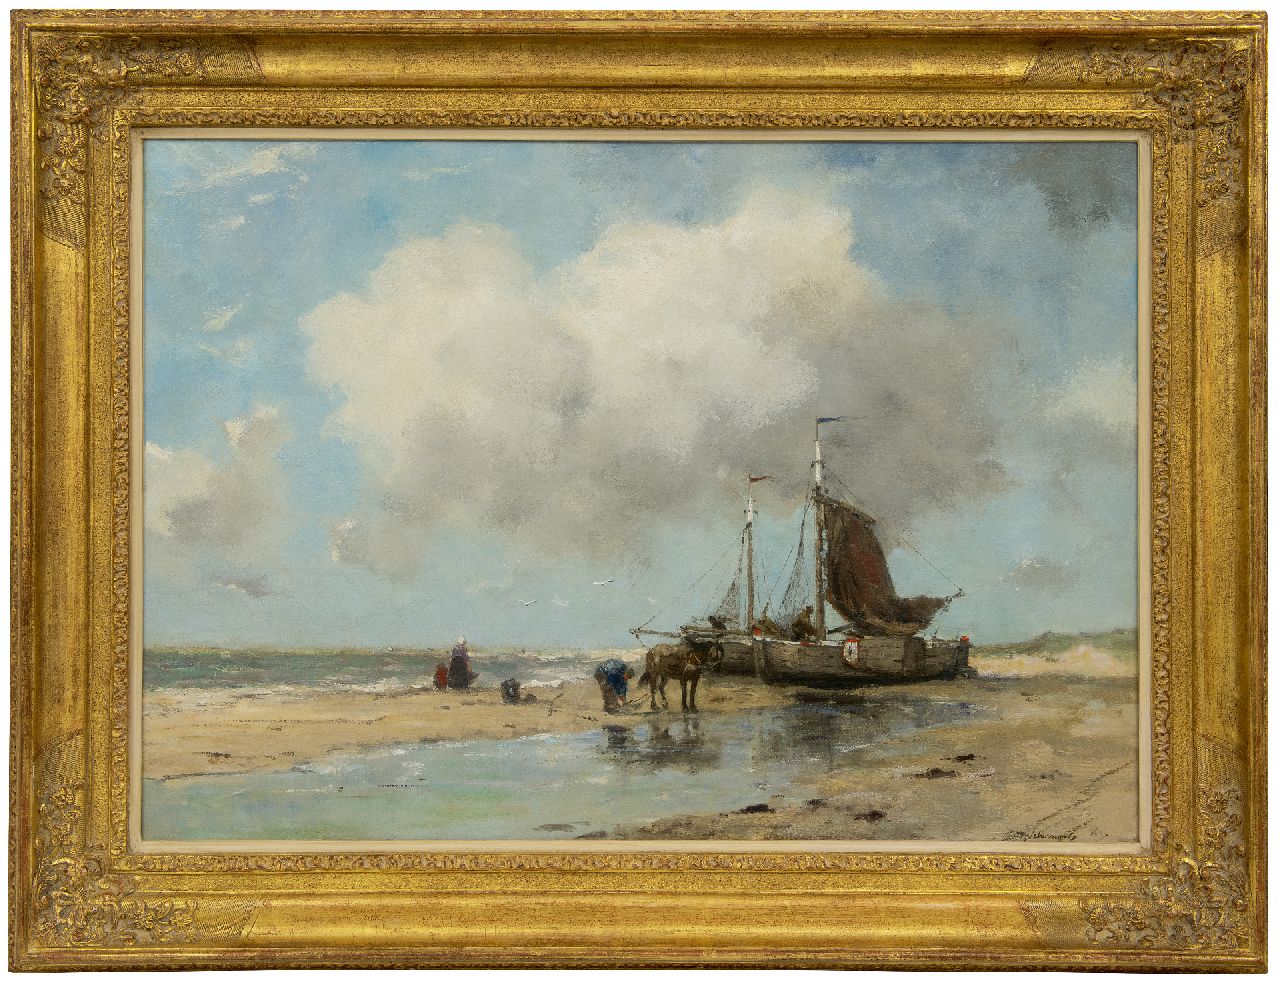 Scherrewitz J.F.C.  | Johan Frederik Cornelis Scherrewitz | Paintings offered for sale | Fishing vessels on the beach, oil on canvas 59.8 x 84.2 cm, signed l.r.